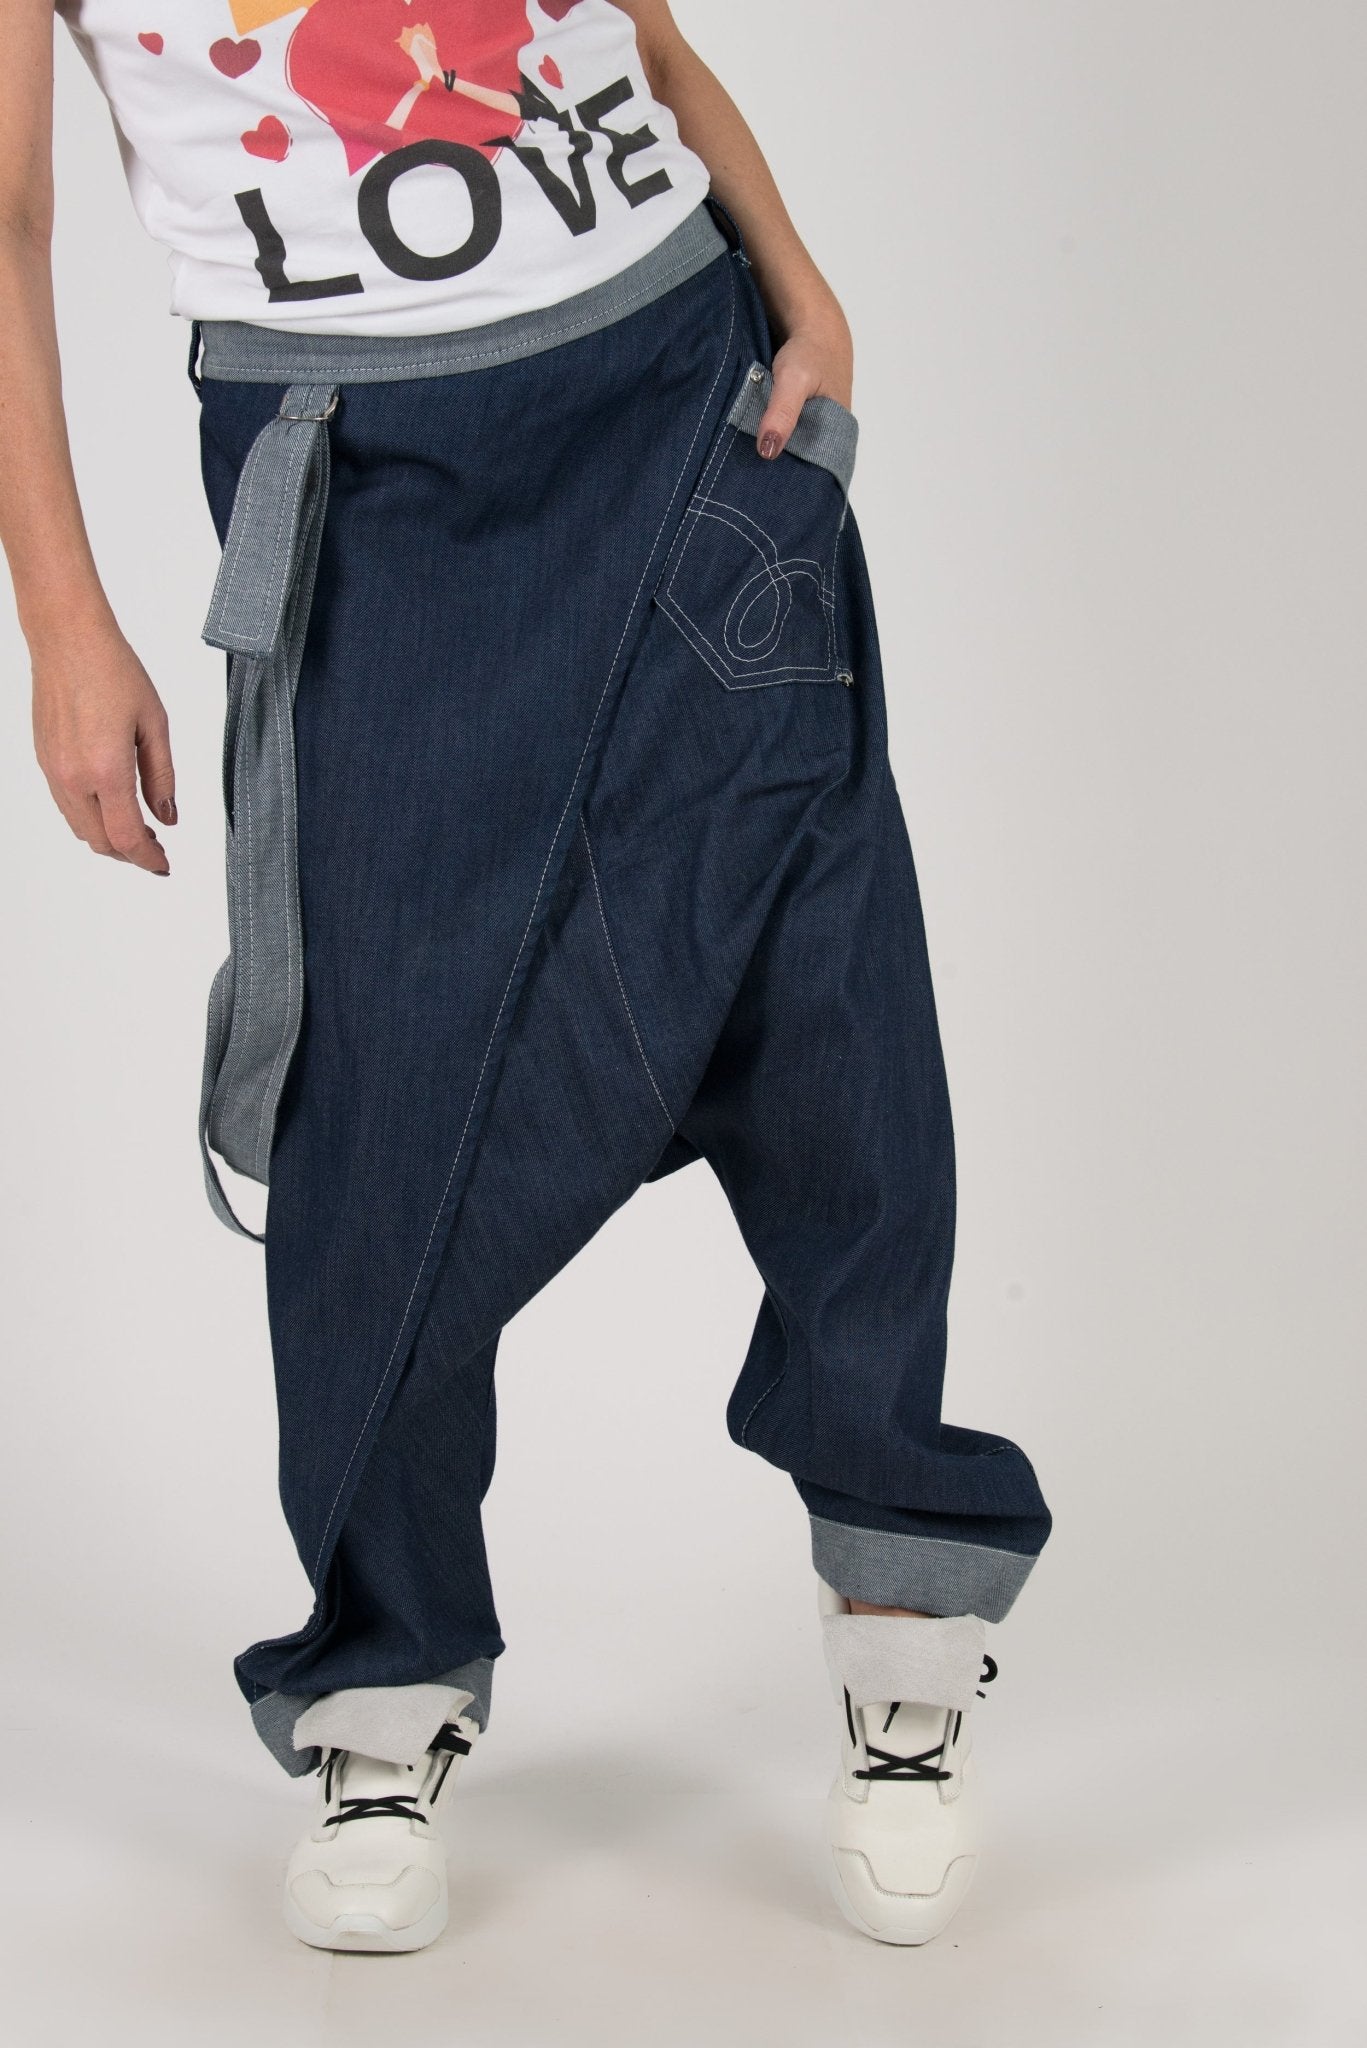 Shop Jeans Drop Crotch Pants Lesila for Women | EUG FASHION